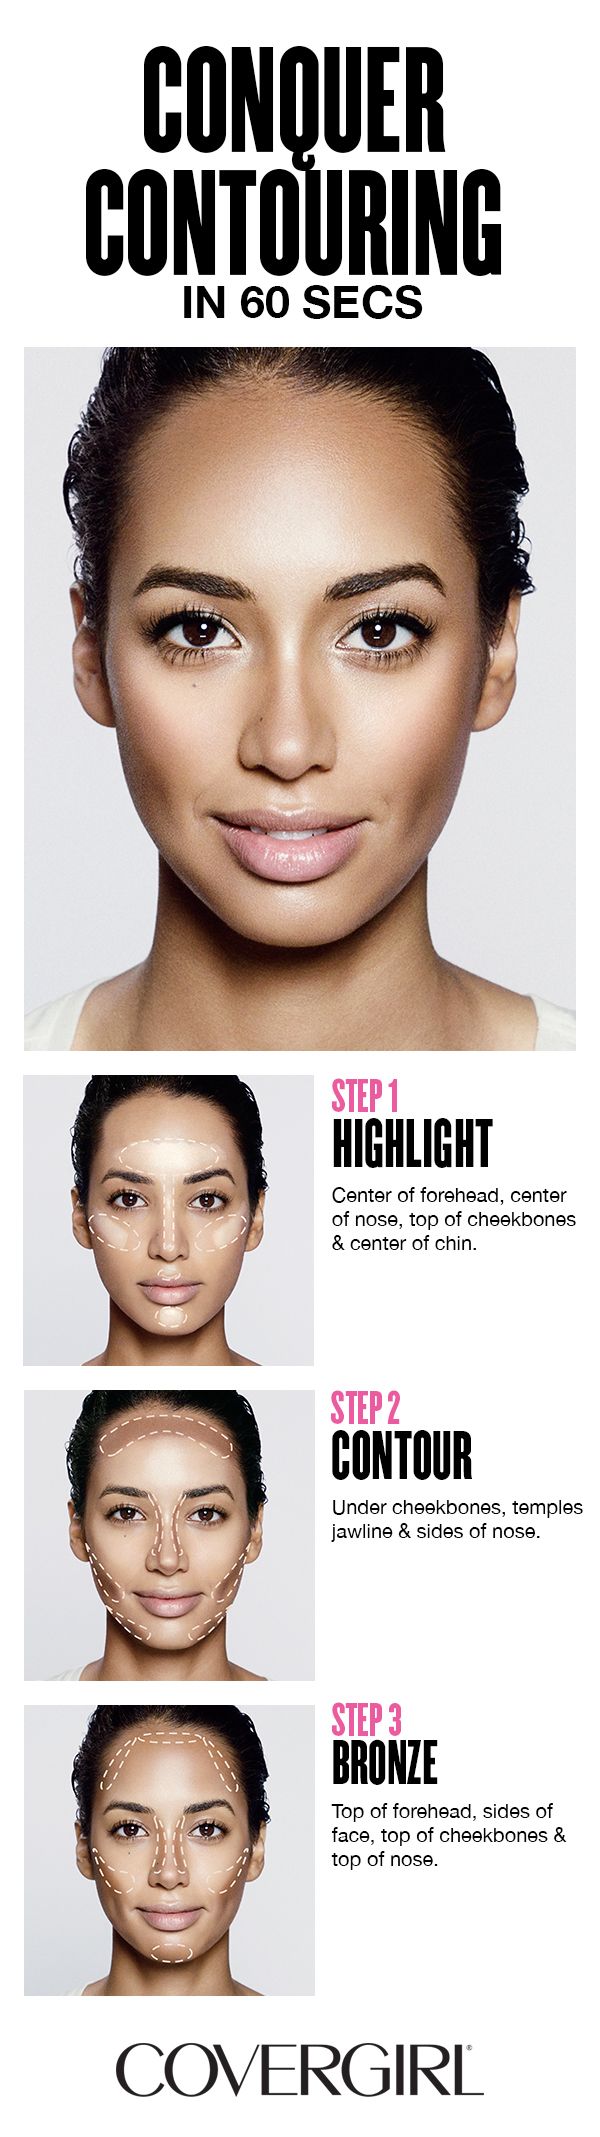 Best Ideas For Makeup Tutorials Contour Your Face In 60 Seconds